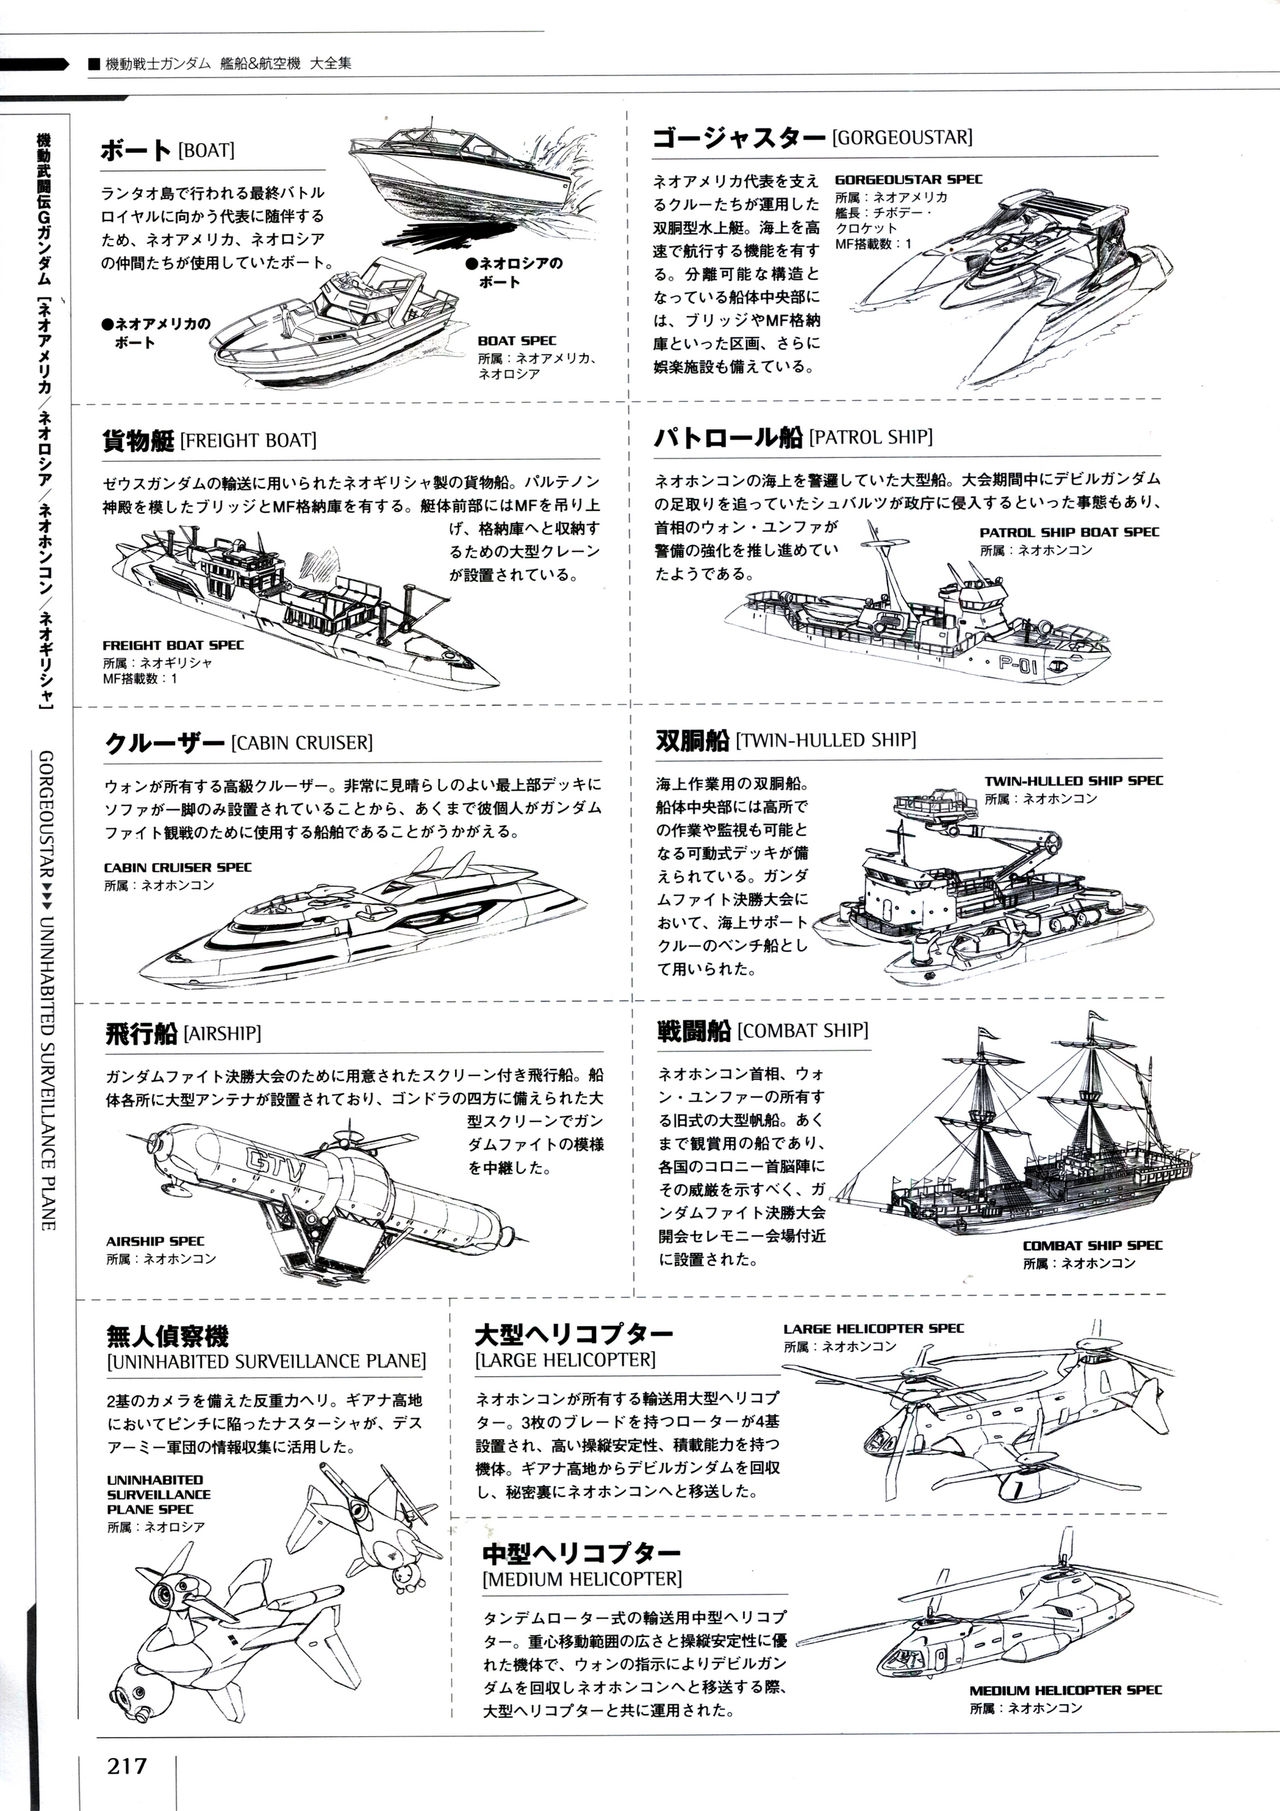 Mobile Suit Gundam - Ship & Aerospace Plane Encyclopedia - Revised Edition 222